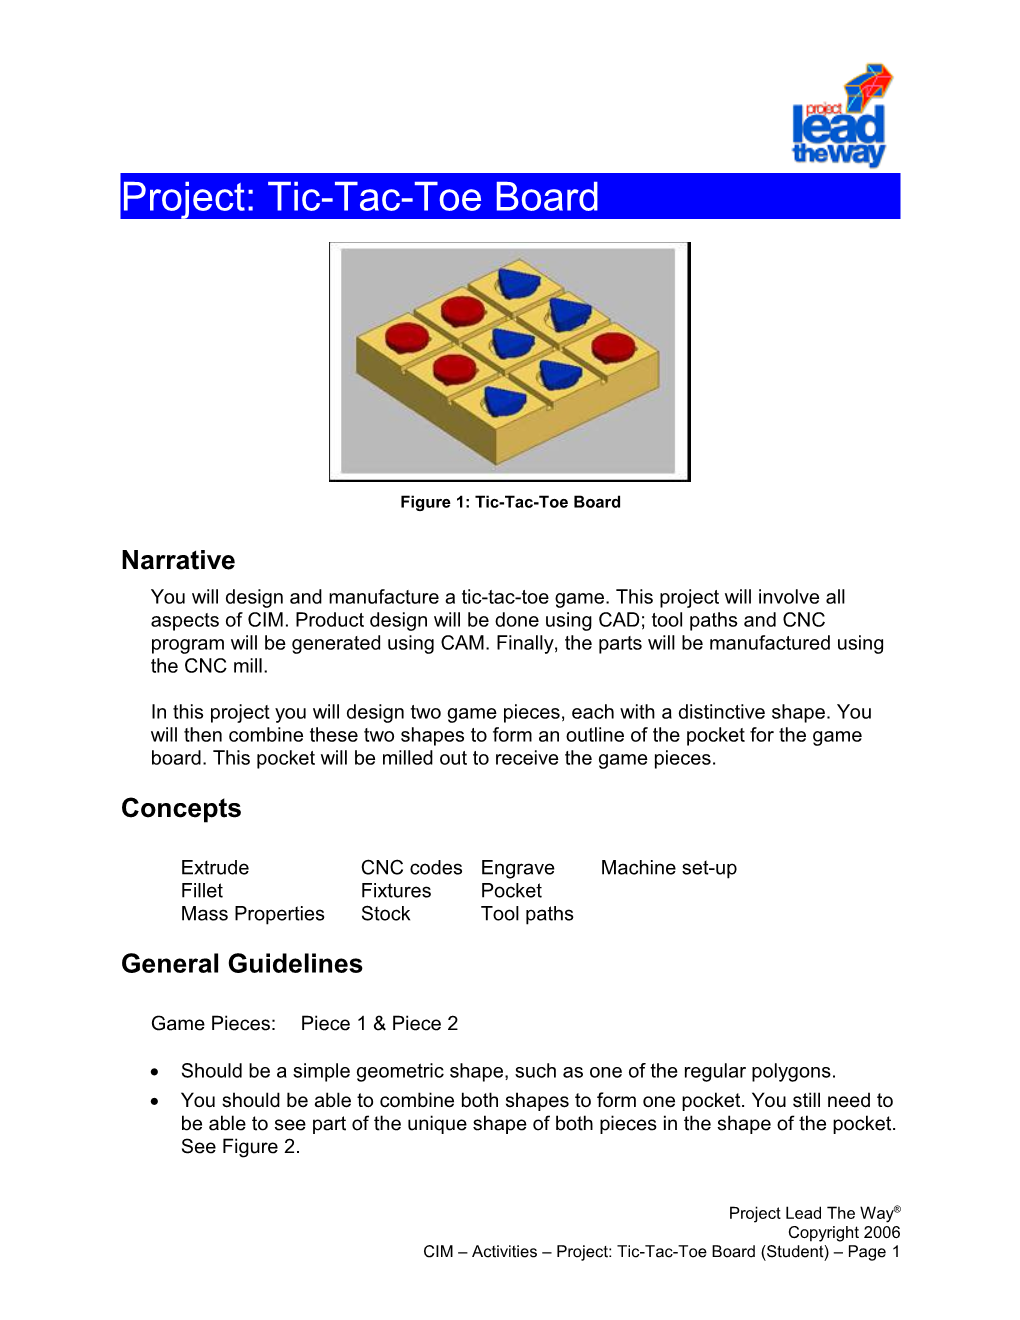 Project: Tic-Tac-Toe Board (Student)